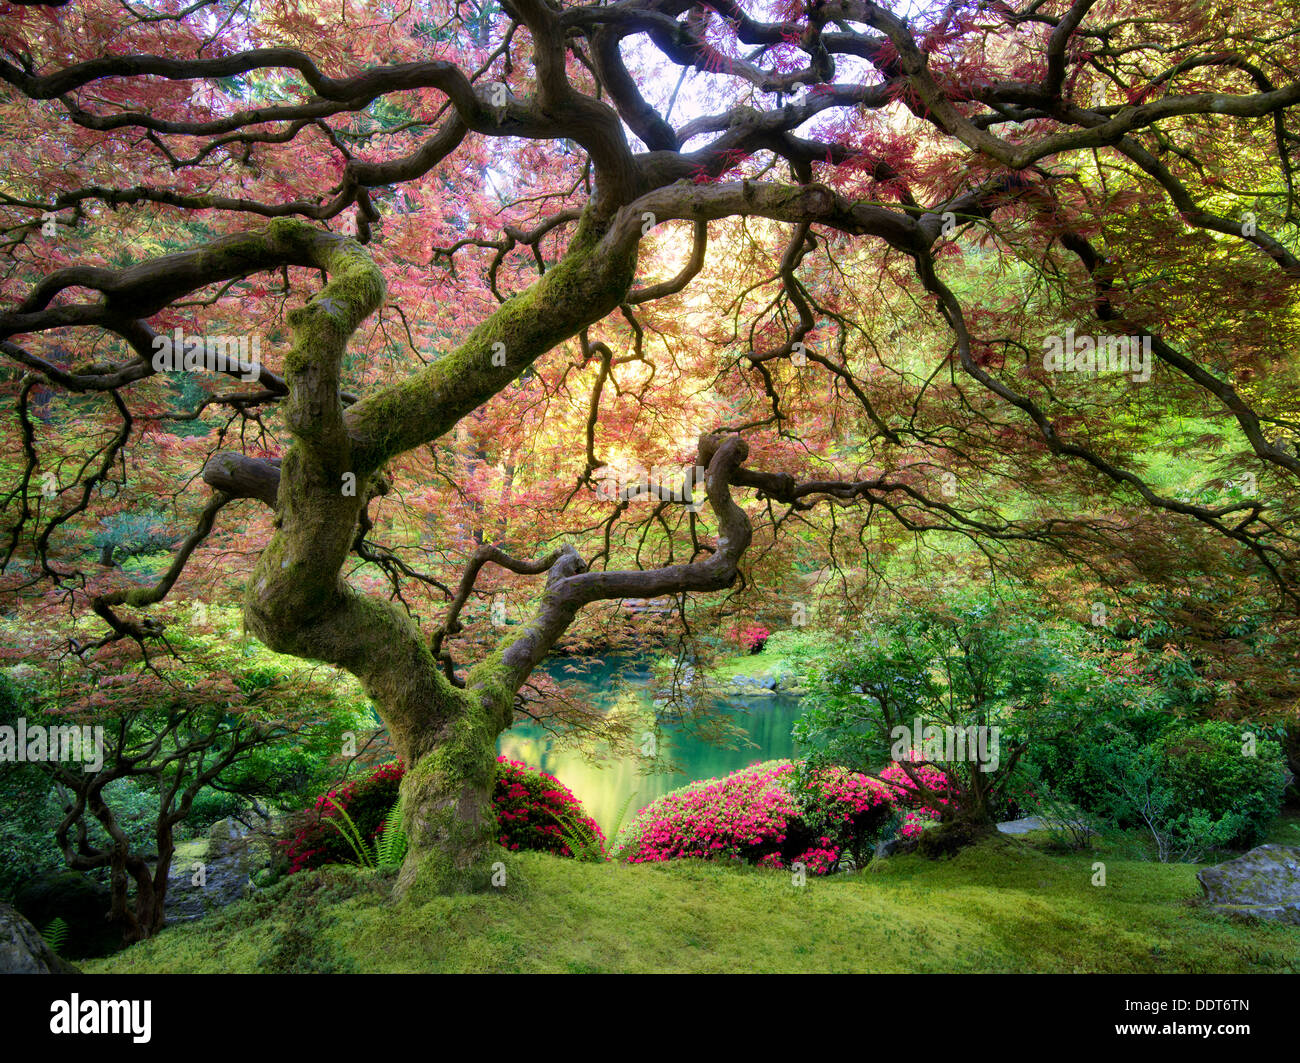 Japanese Maple tree with new growth. Portland Japanese Garden, Oregon Stock Photo